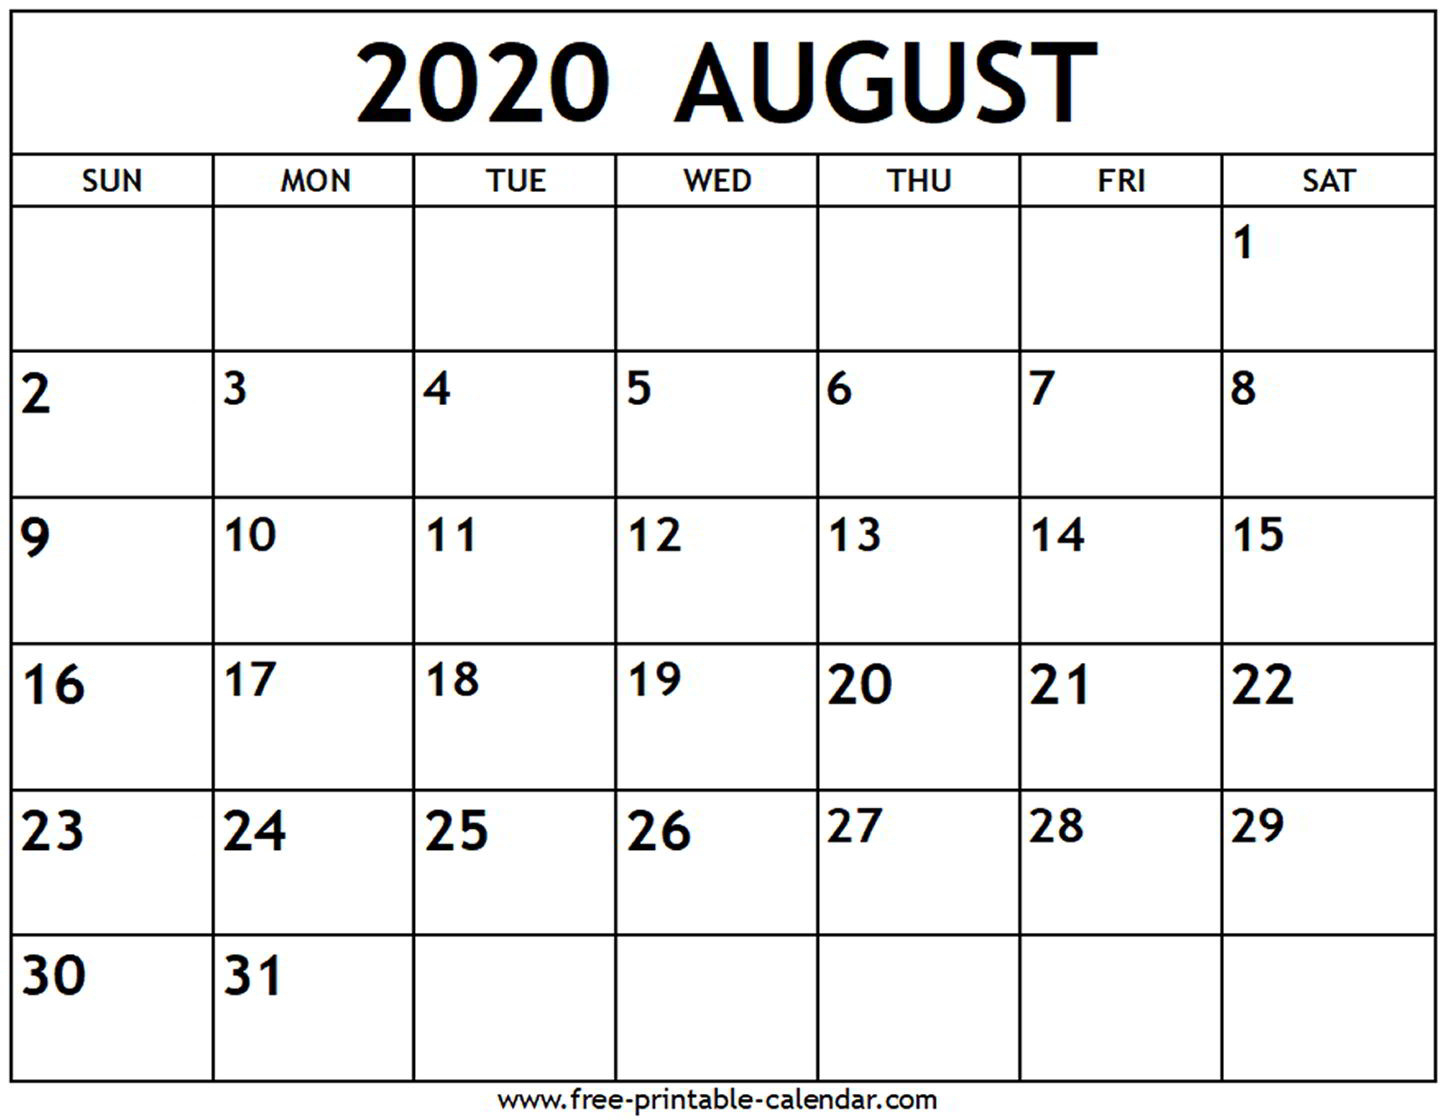 Calendar August 2020 Template - Wpa.wpart.co